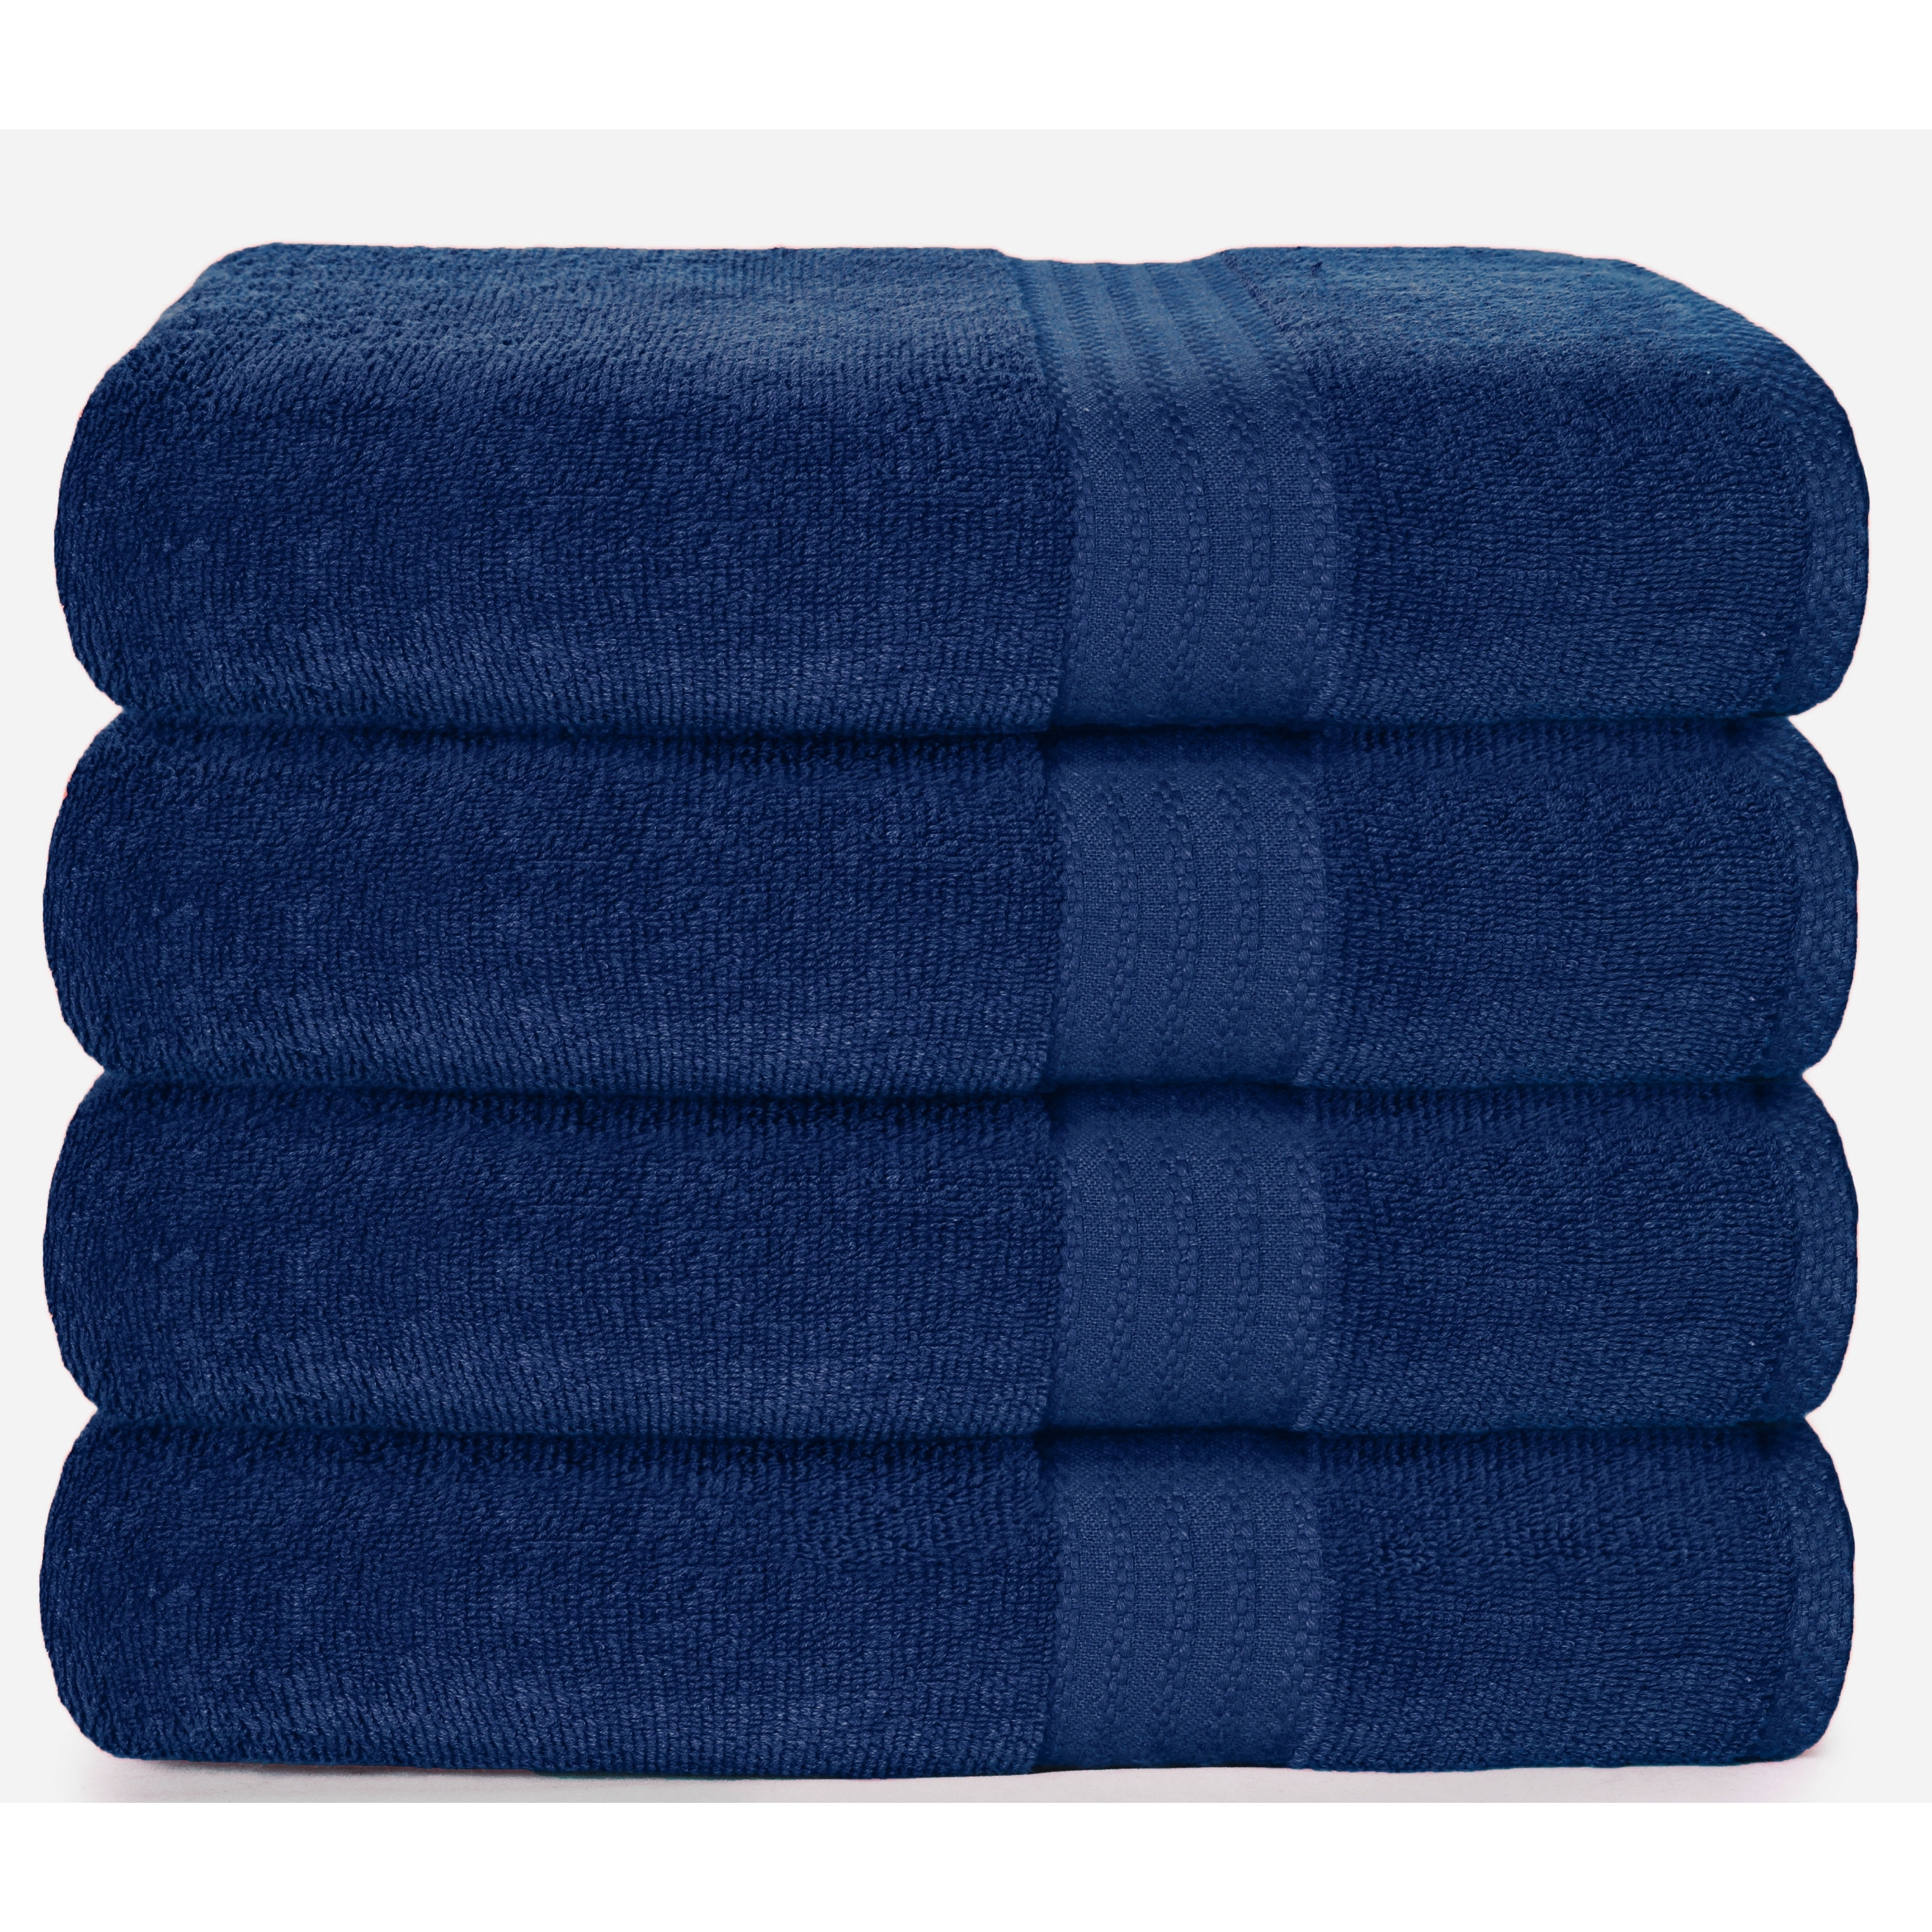 https://ak1.ostkcdn.com/images/products/30363975/Glamburg-Premium-Cotton-4-Pack-Bath-Towel-Set-100-Pure-Cotton-4-Bath-Towels-27x54-Ultra-Soft-Highly-Absorbent-8a55ab4a-3f0f-4c6f-8f4f-12aeebae3ea1.jpg